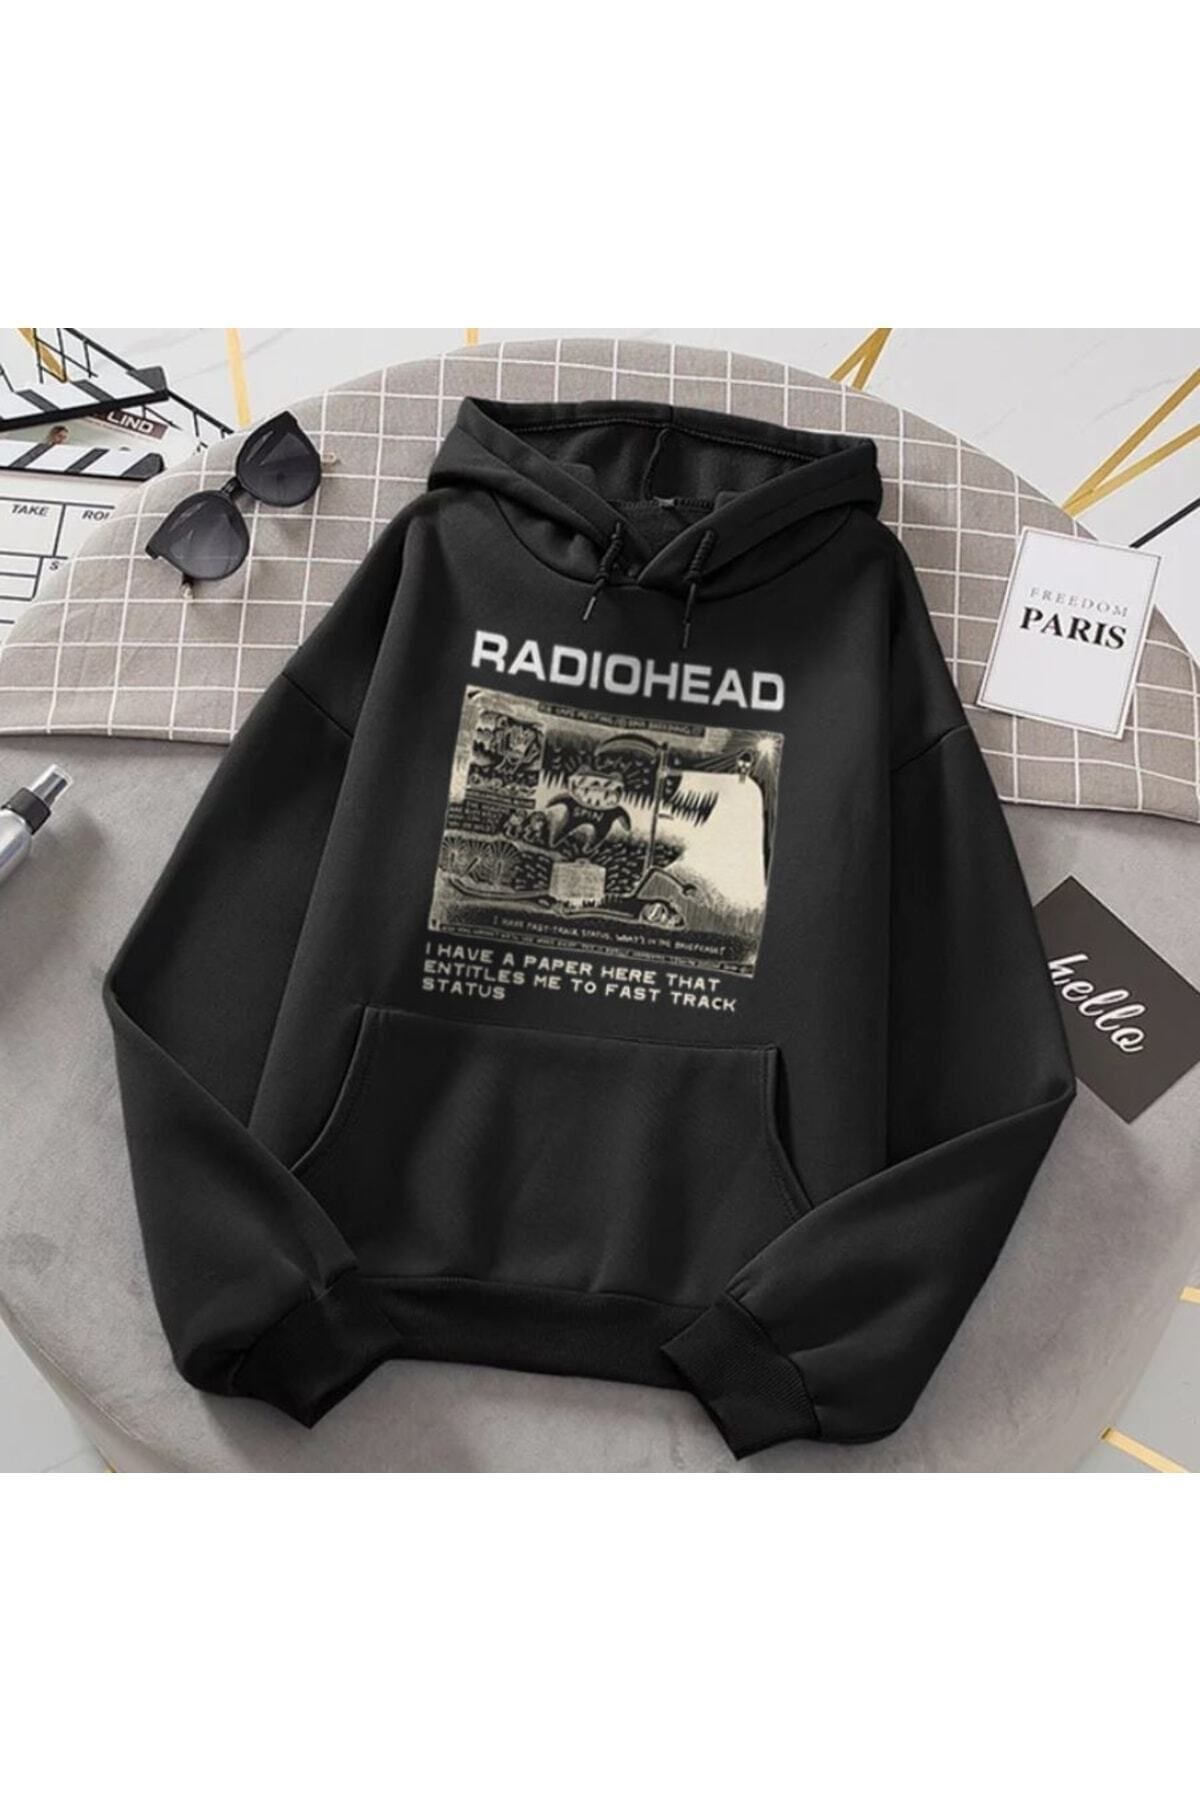 Favorim50ton Radiohead Dna Breeding Siyah Kapşonlu Kalın Kumaş ( Unisex )